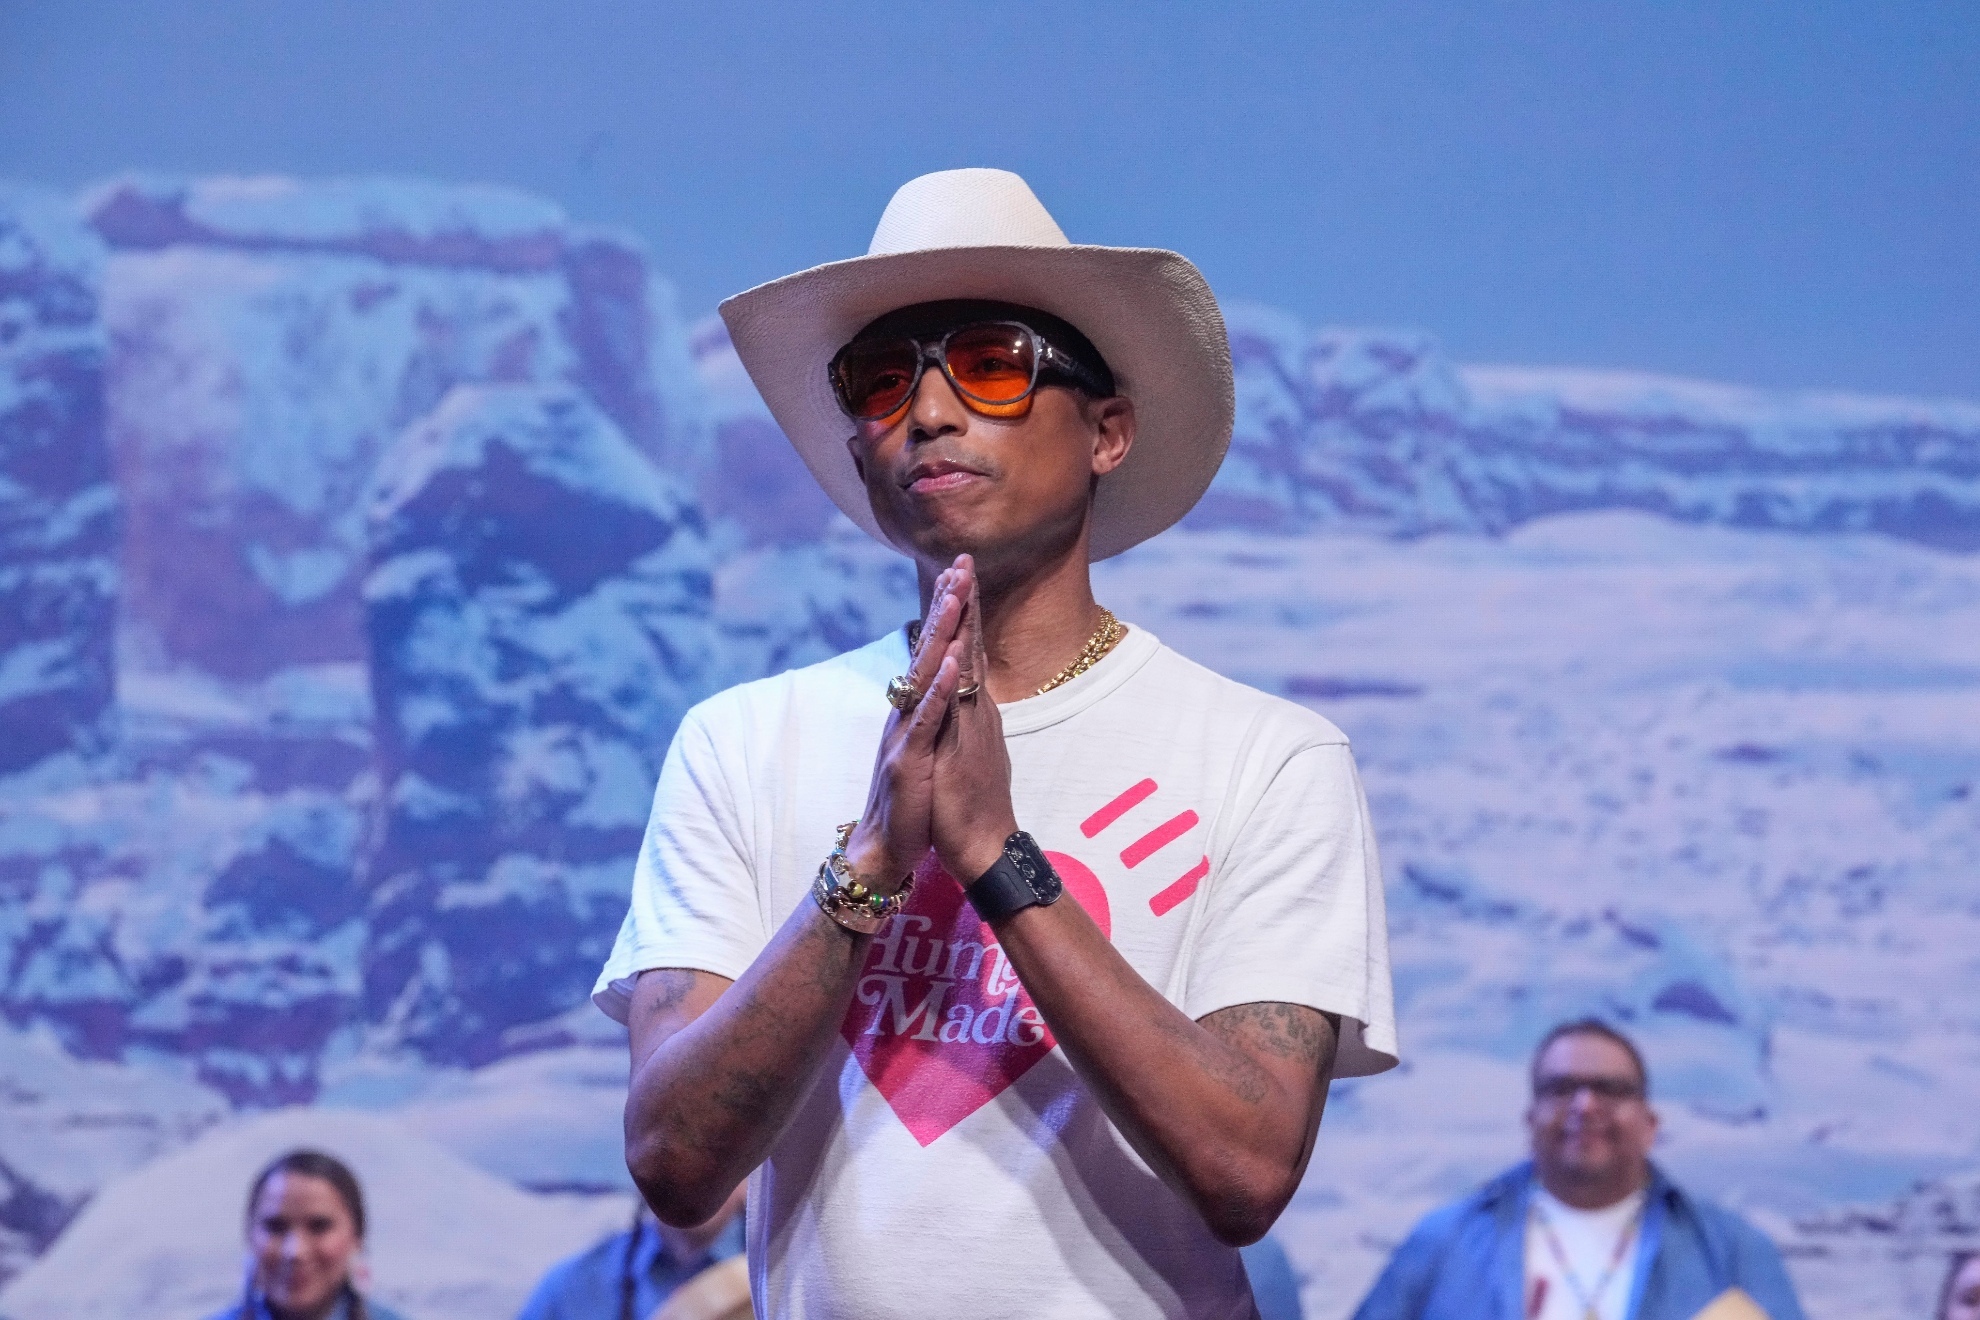 Pharrell Williams at a fashion event